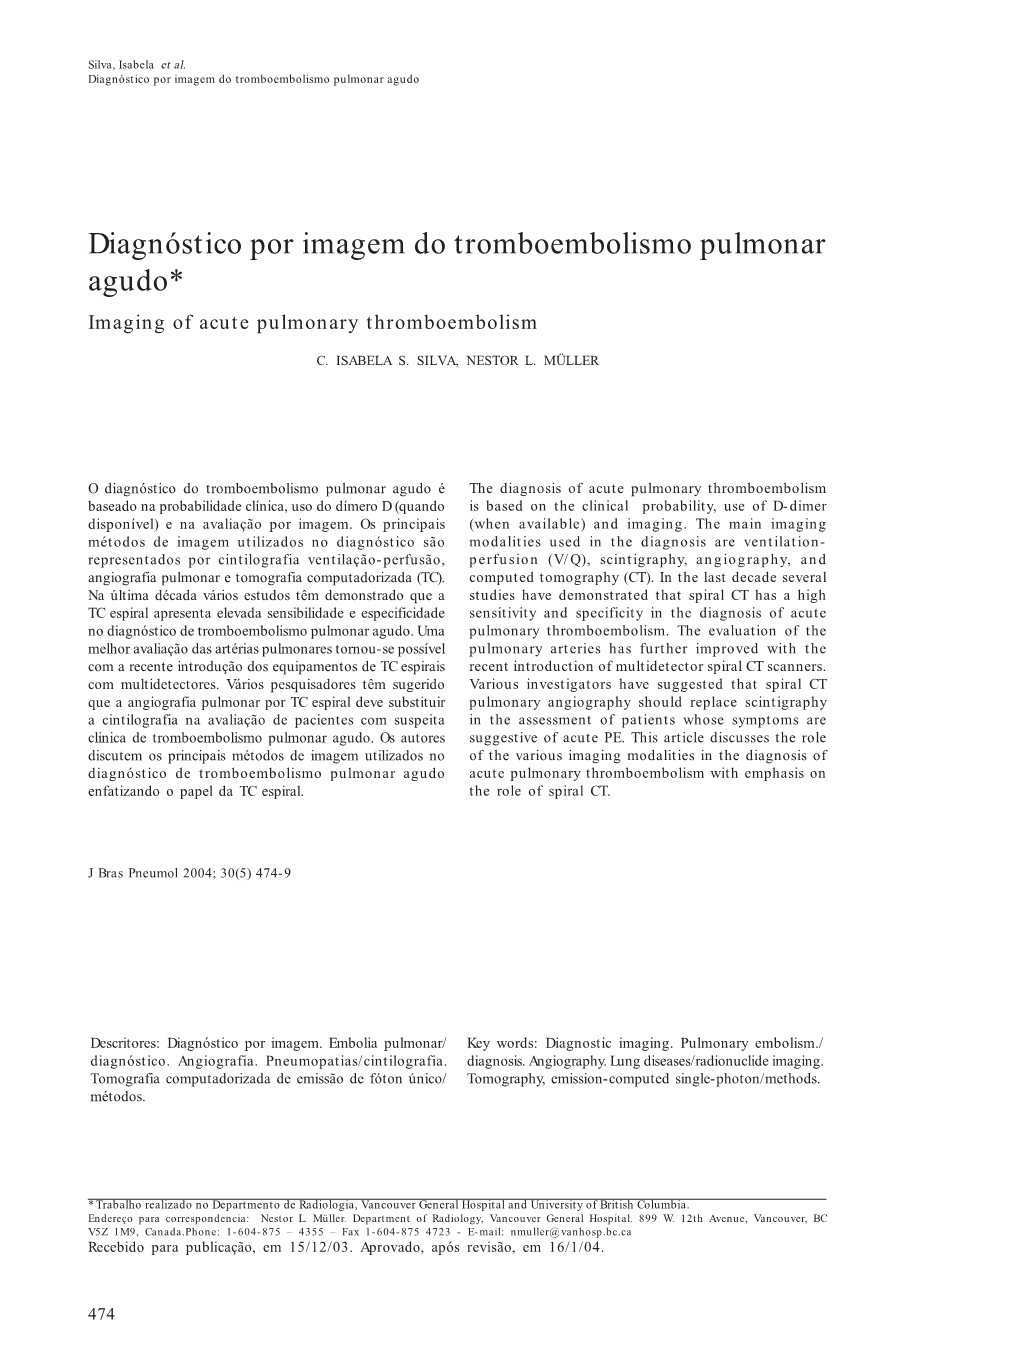 Imaging of Acute Pulmonary Thromboembolism*